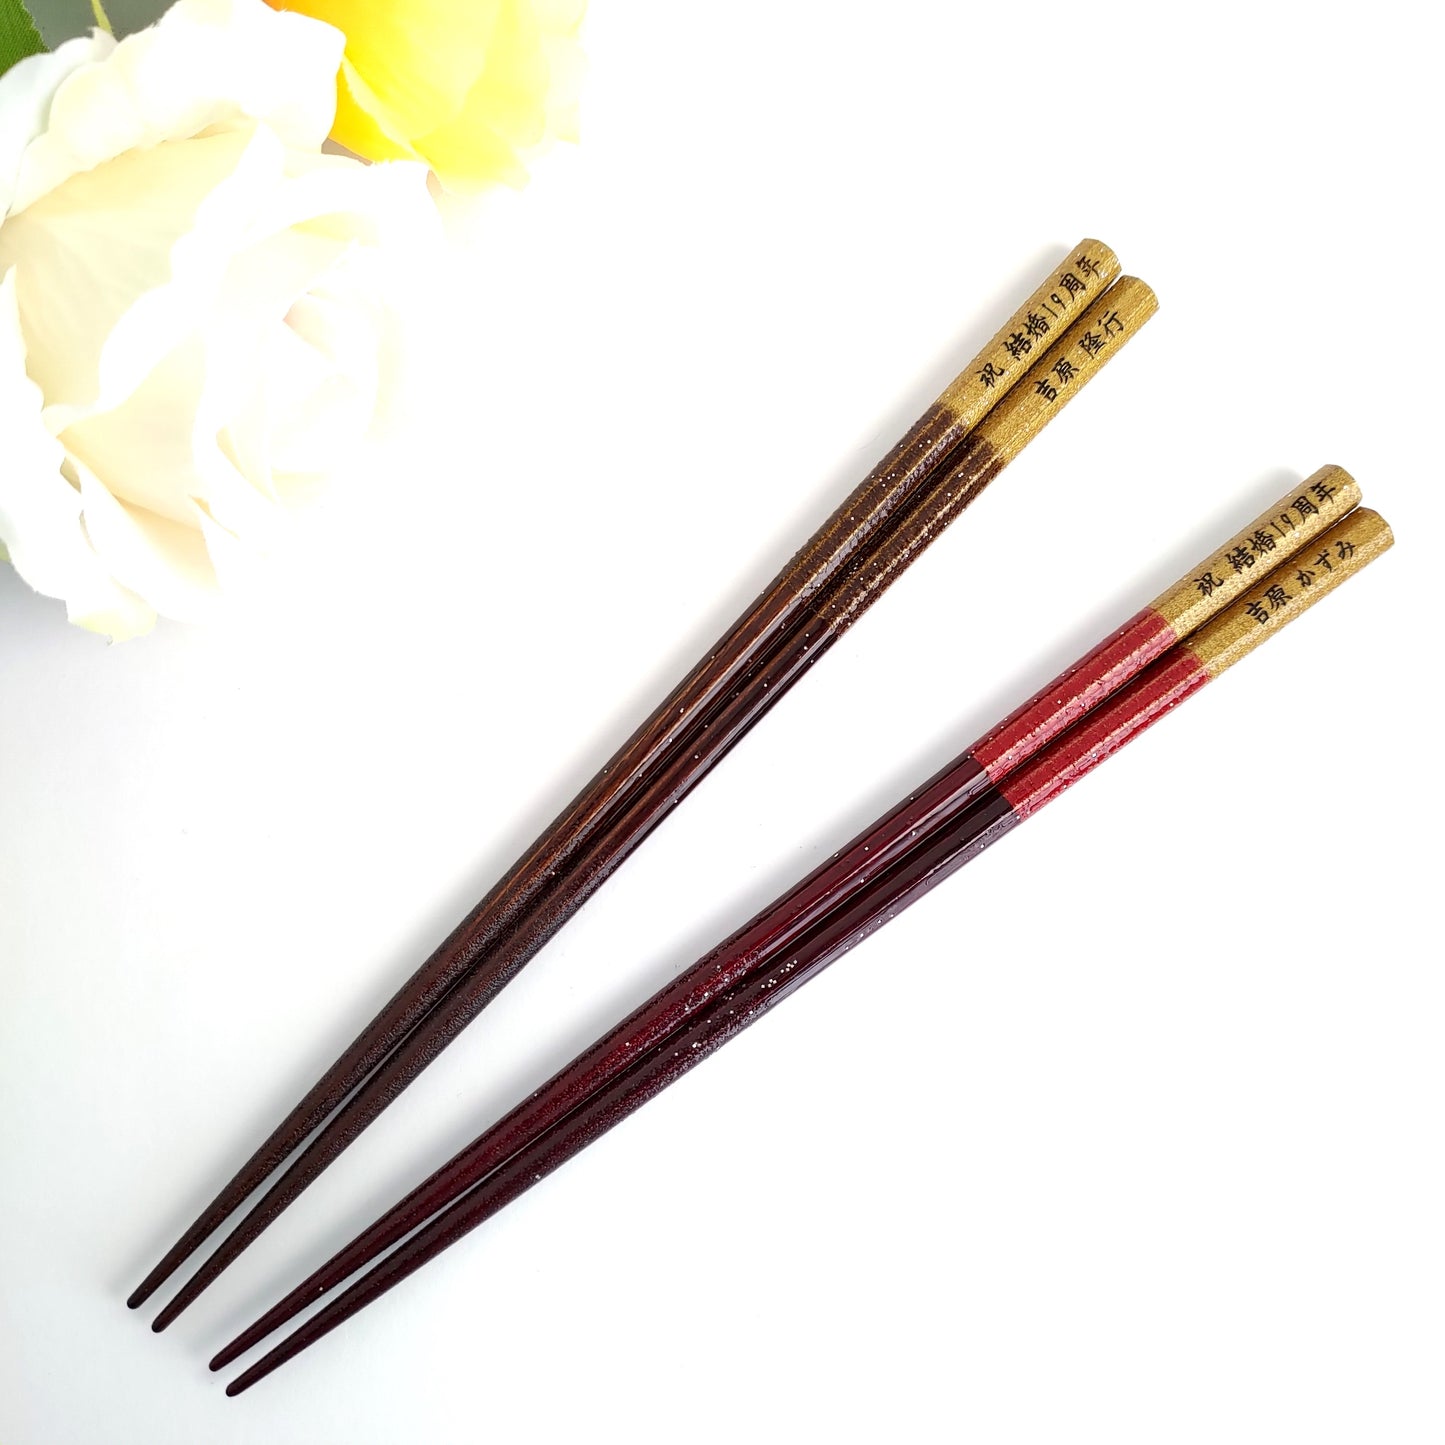 Octagonal Golden Spirit Japanese chopsticks brown red  - SINGLE PAIR